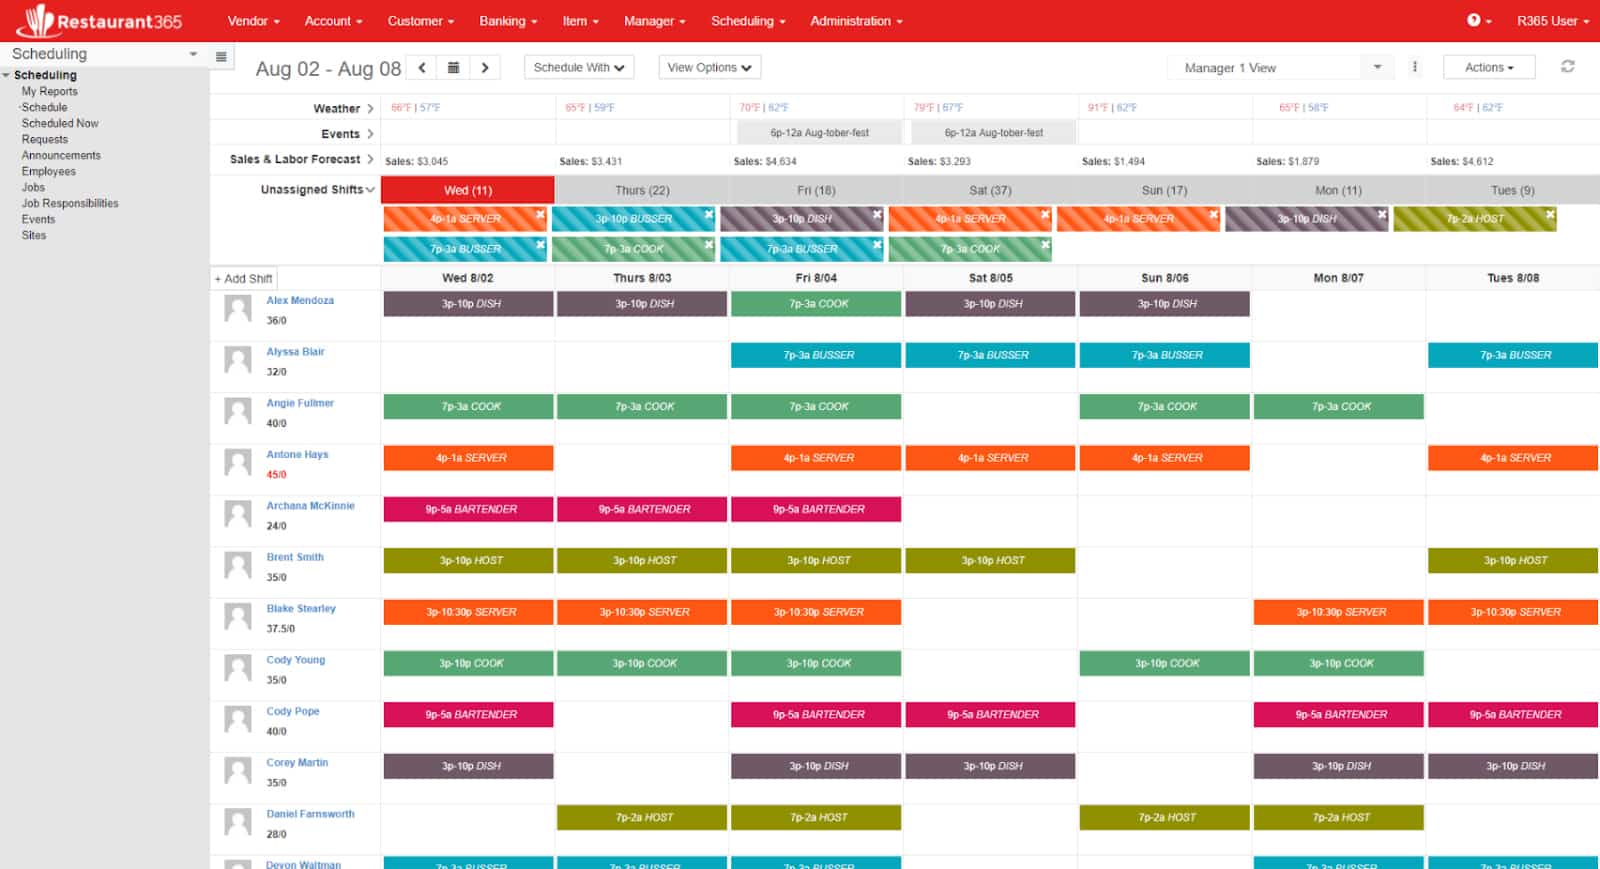 Screenshot of Restaurant365 Scheduling module